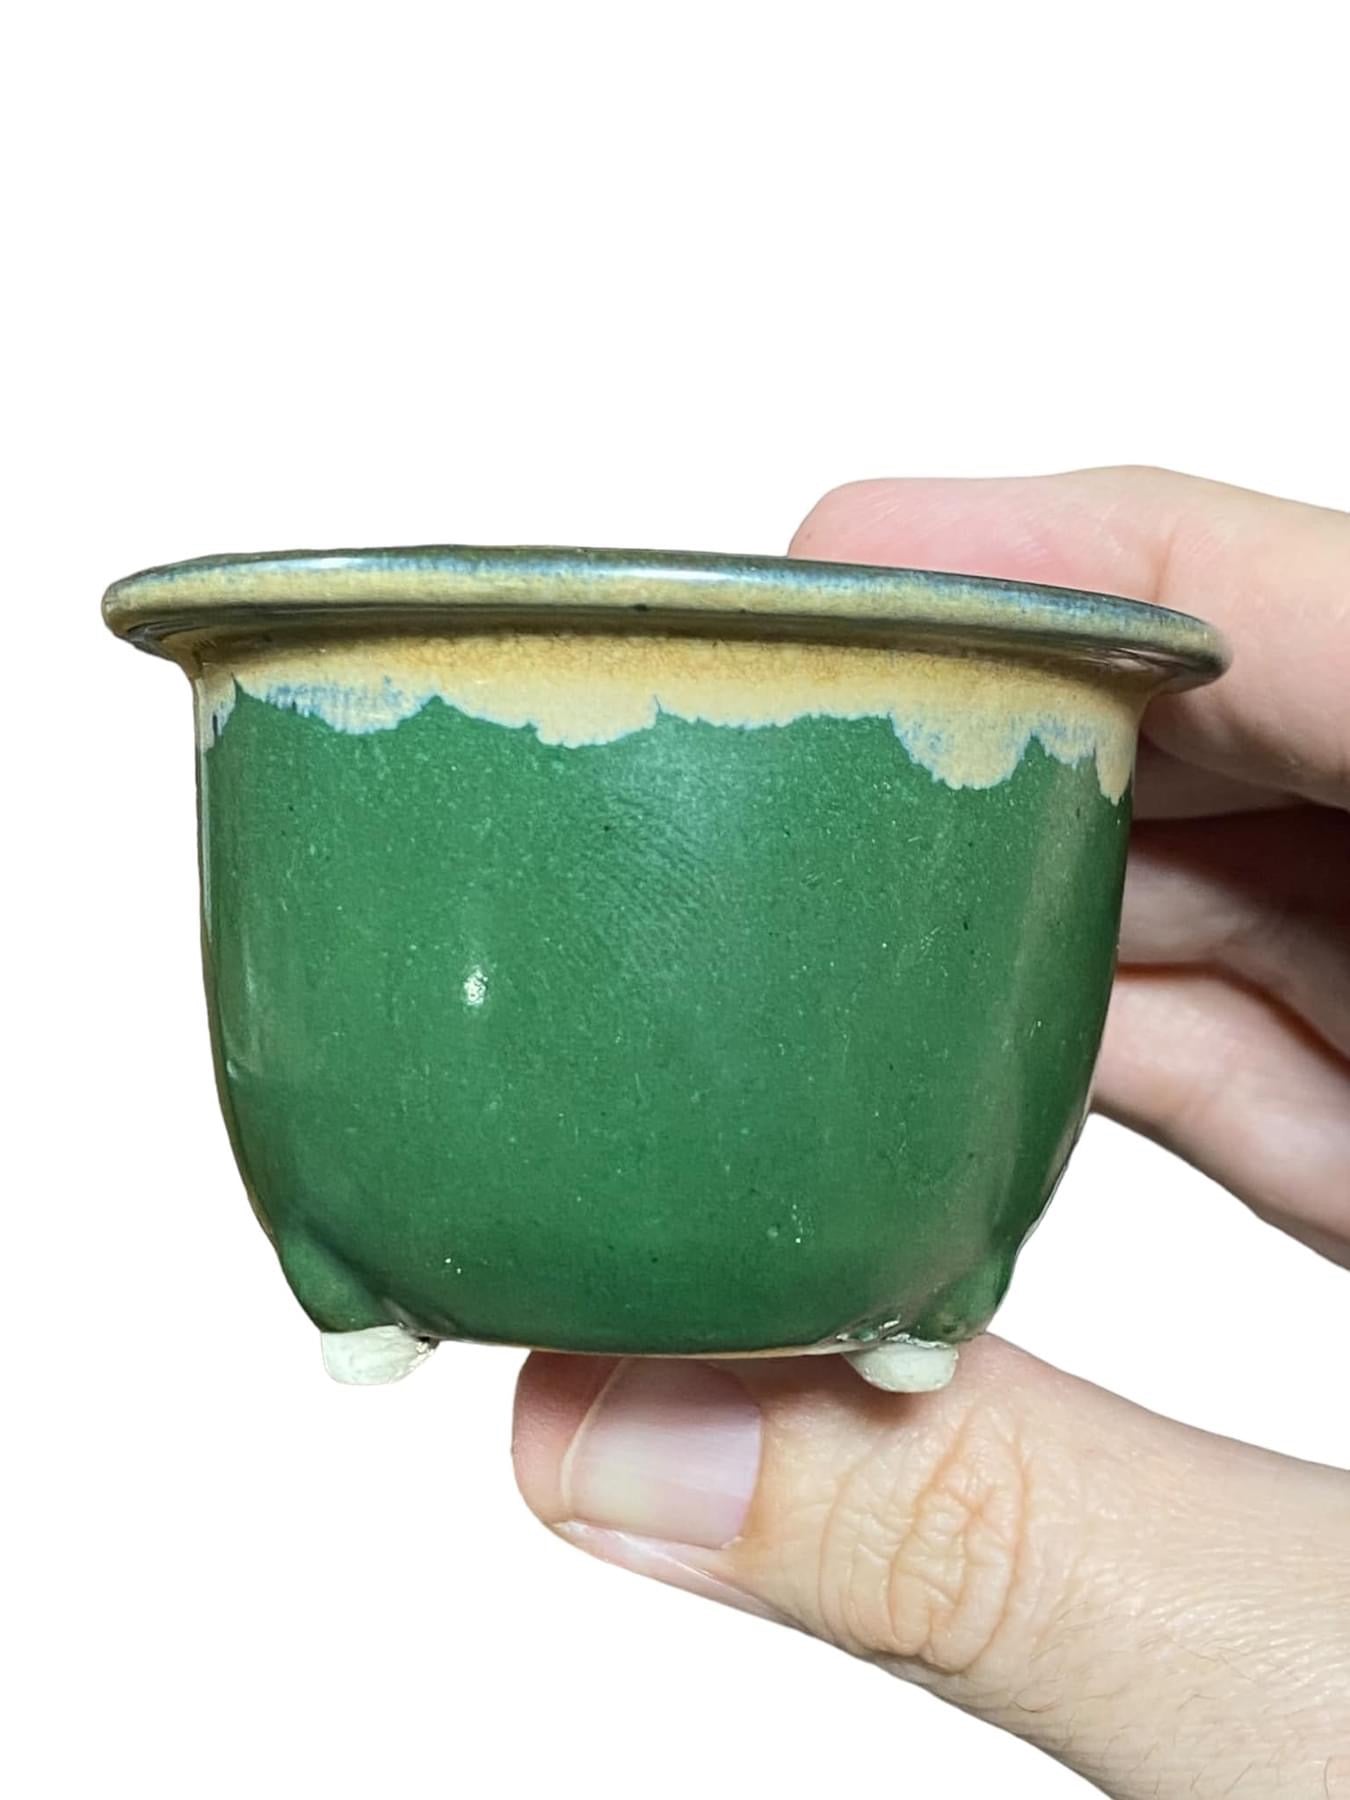 Japanese - Older Green Glazed Semi-Cascade Style Bonsai or Accent Pot